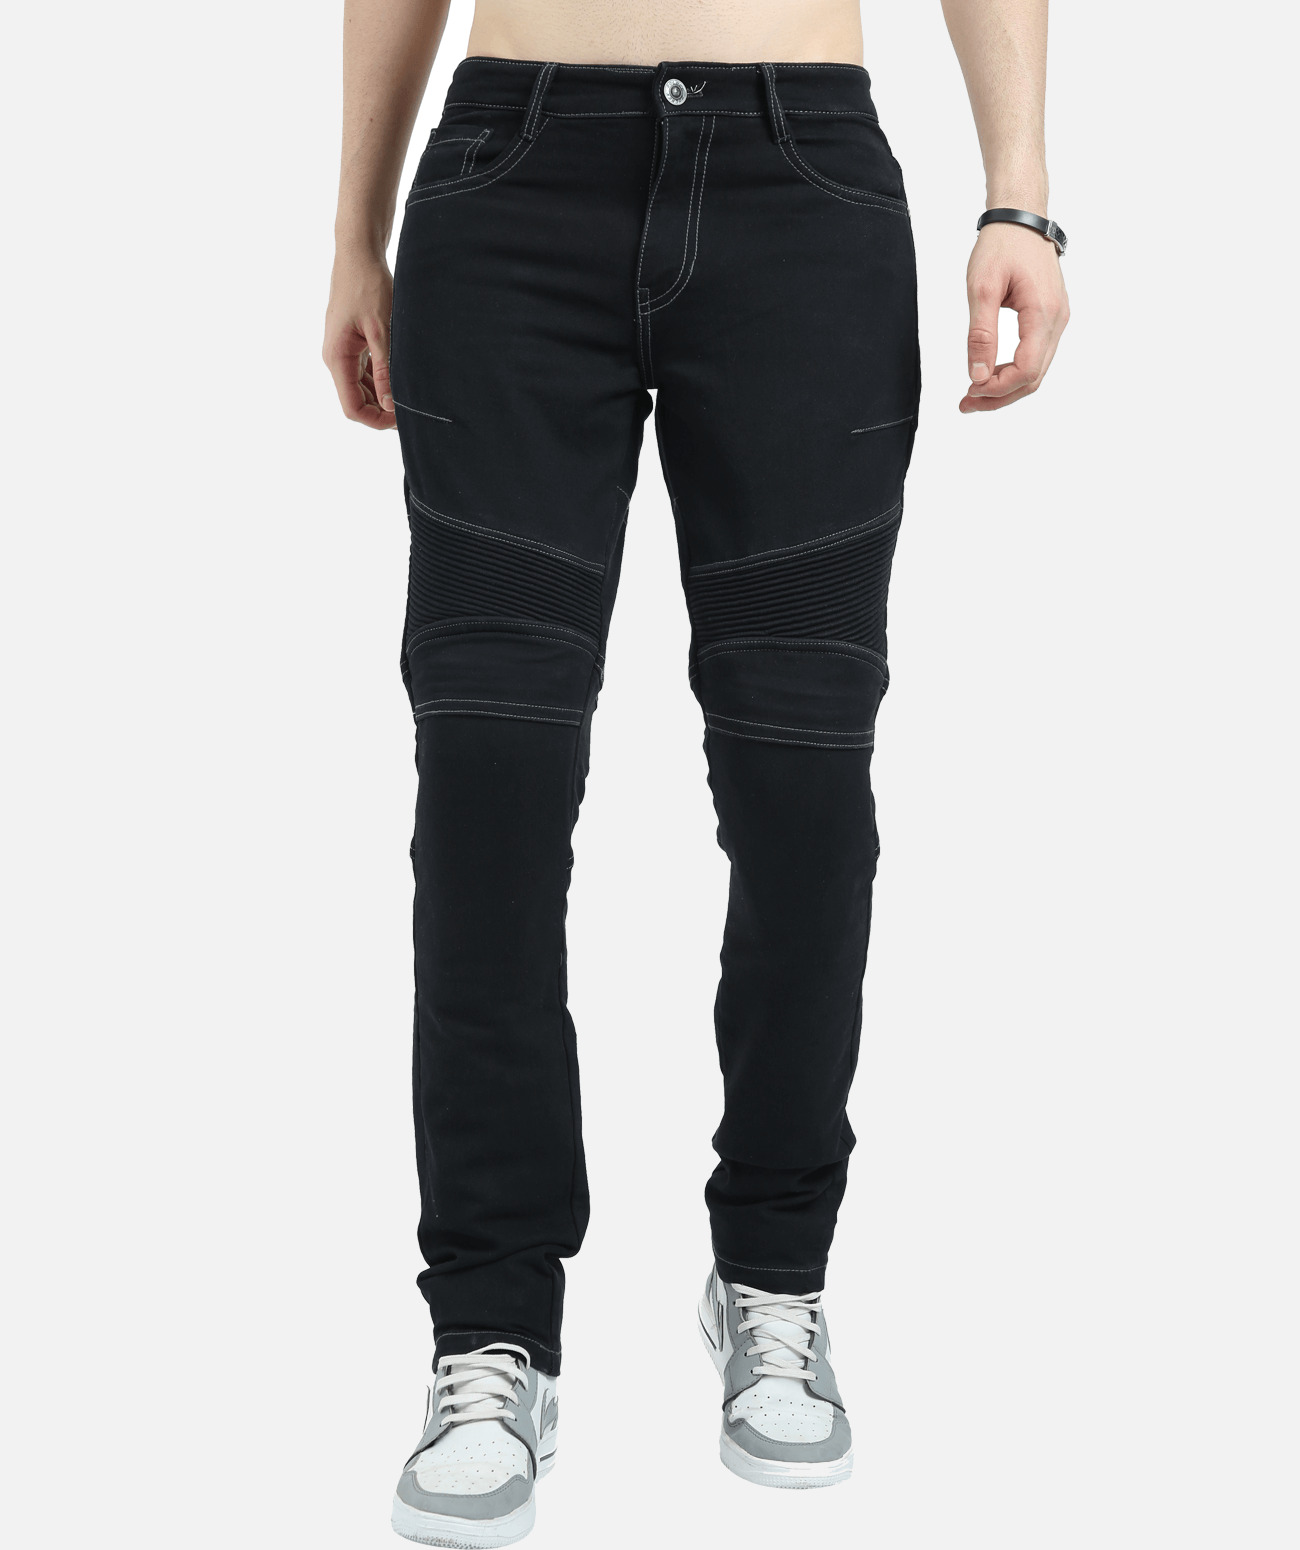 Parx Black Denim Jeans